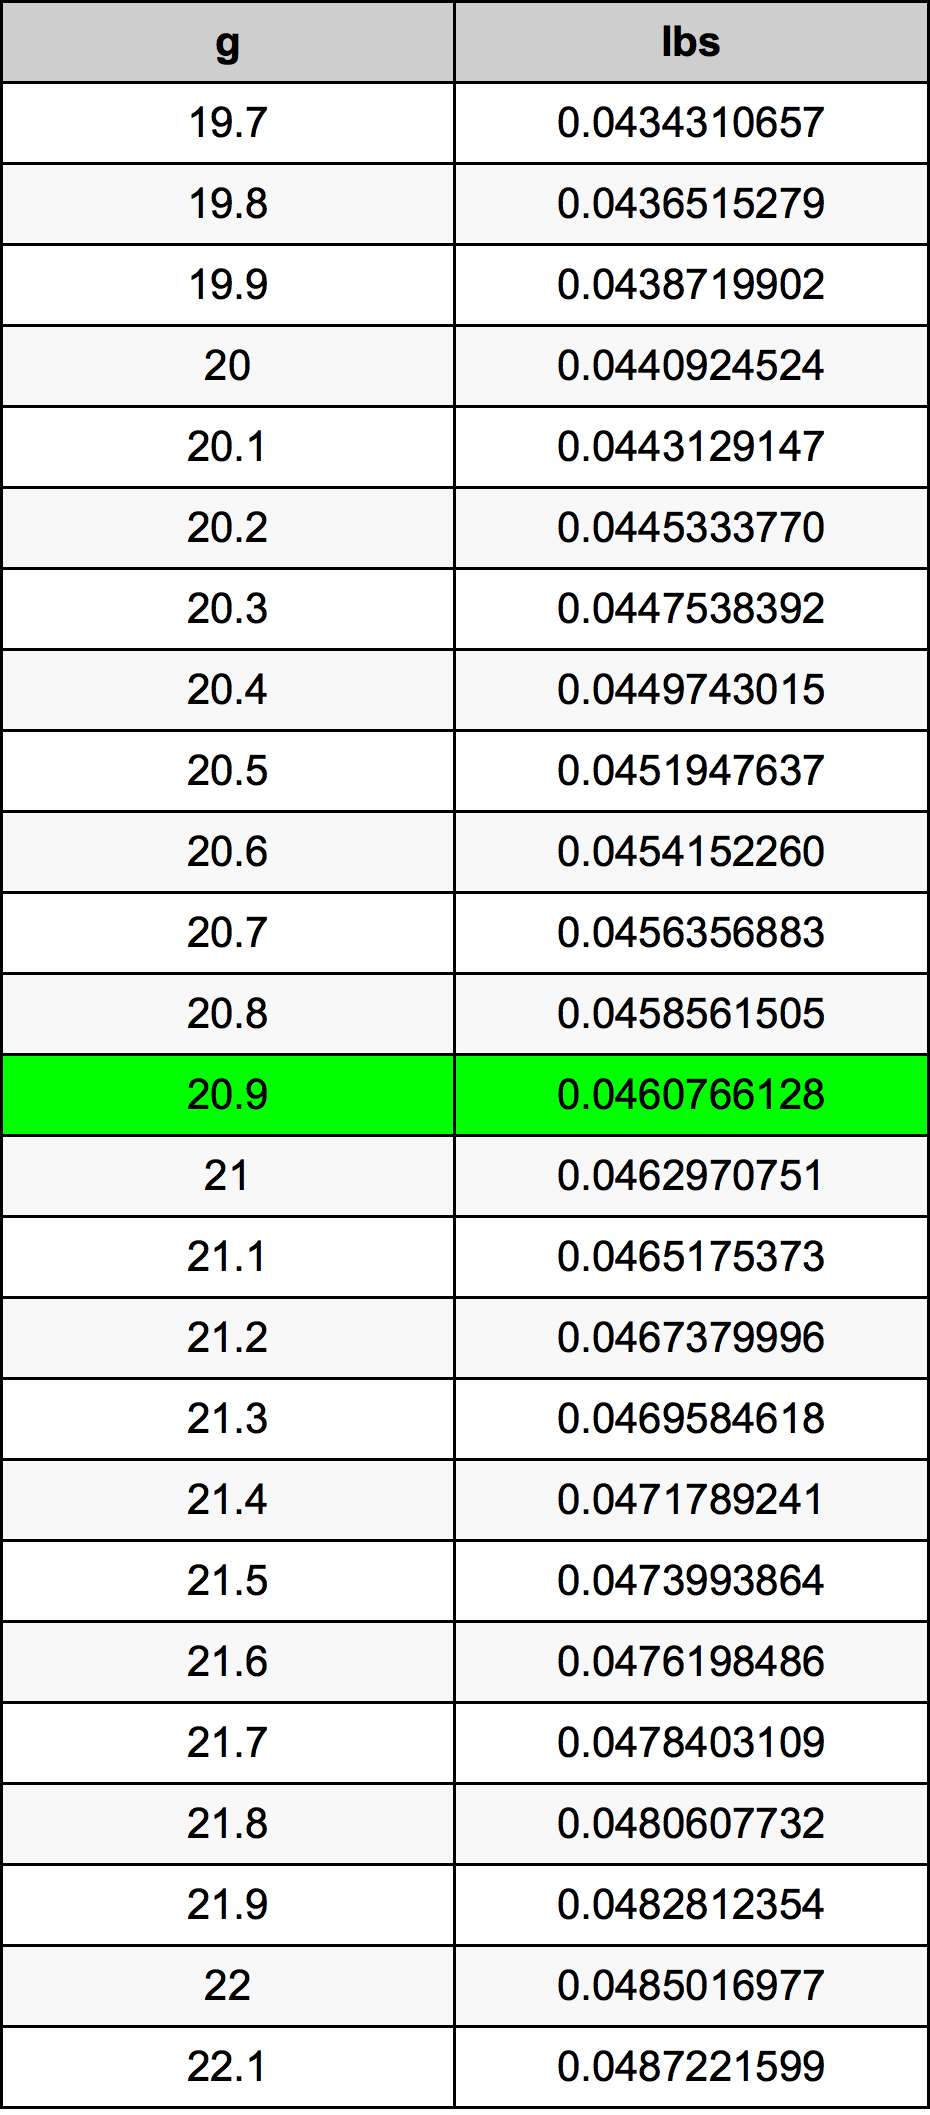 20.9 غرام جدول تحويل